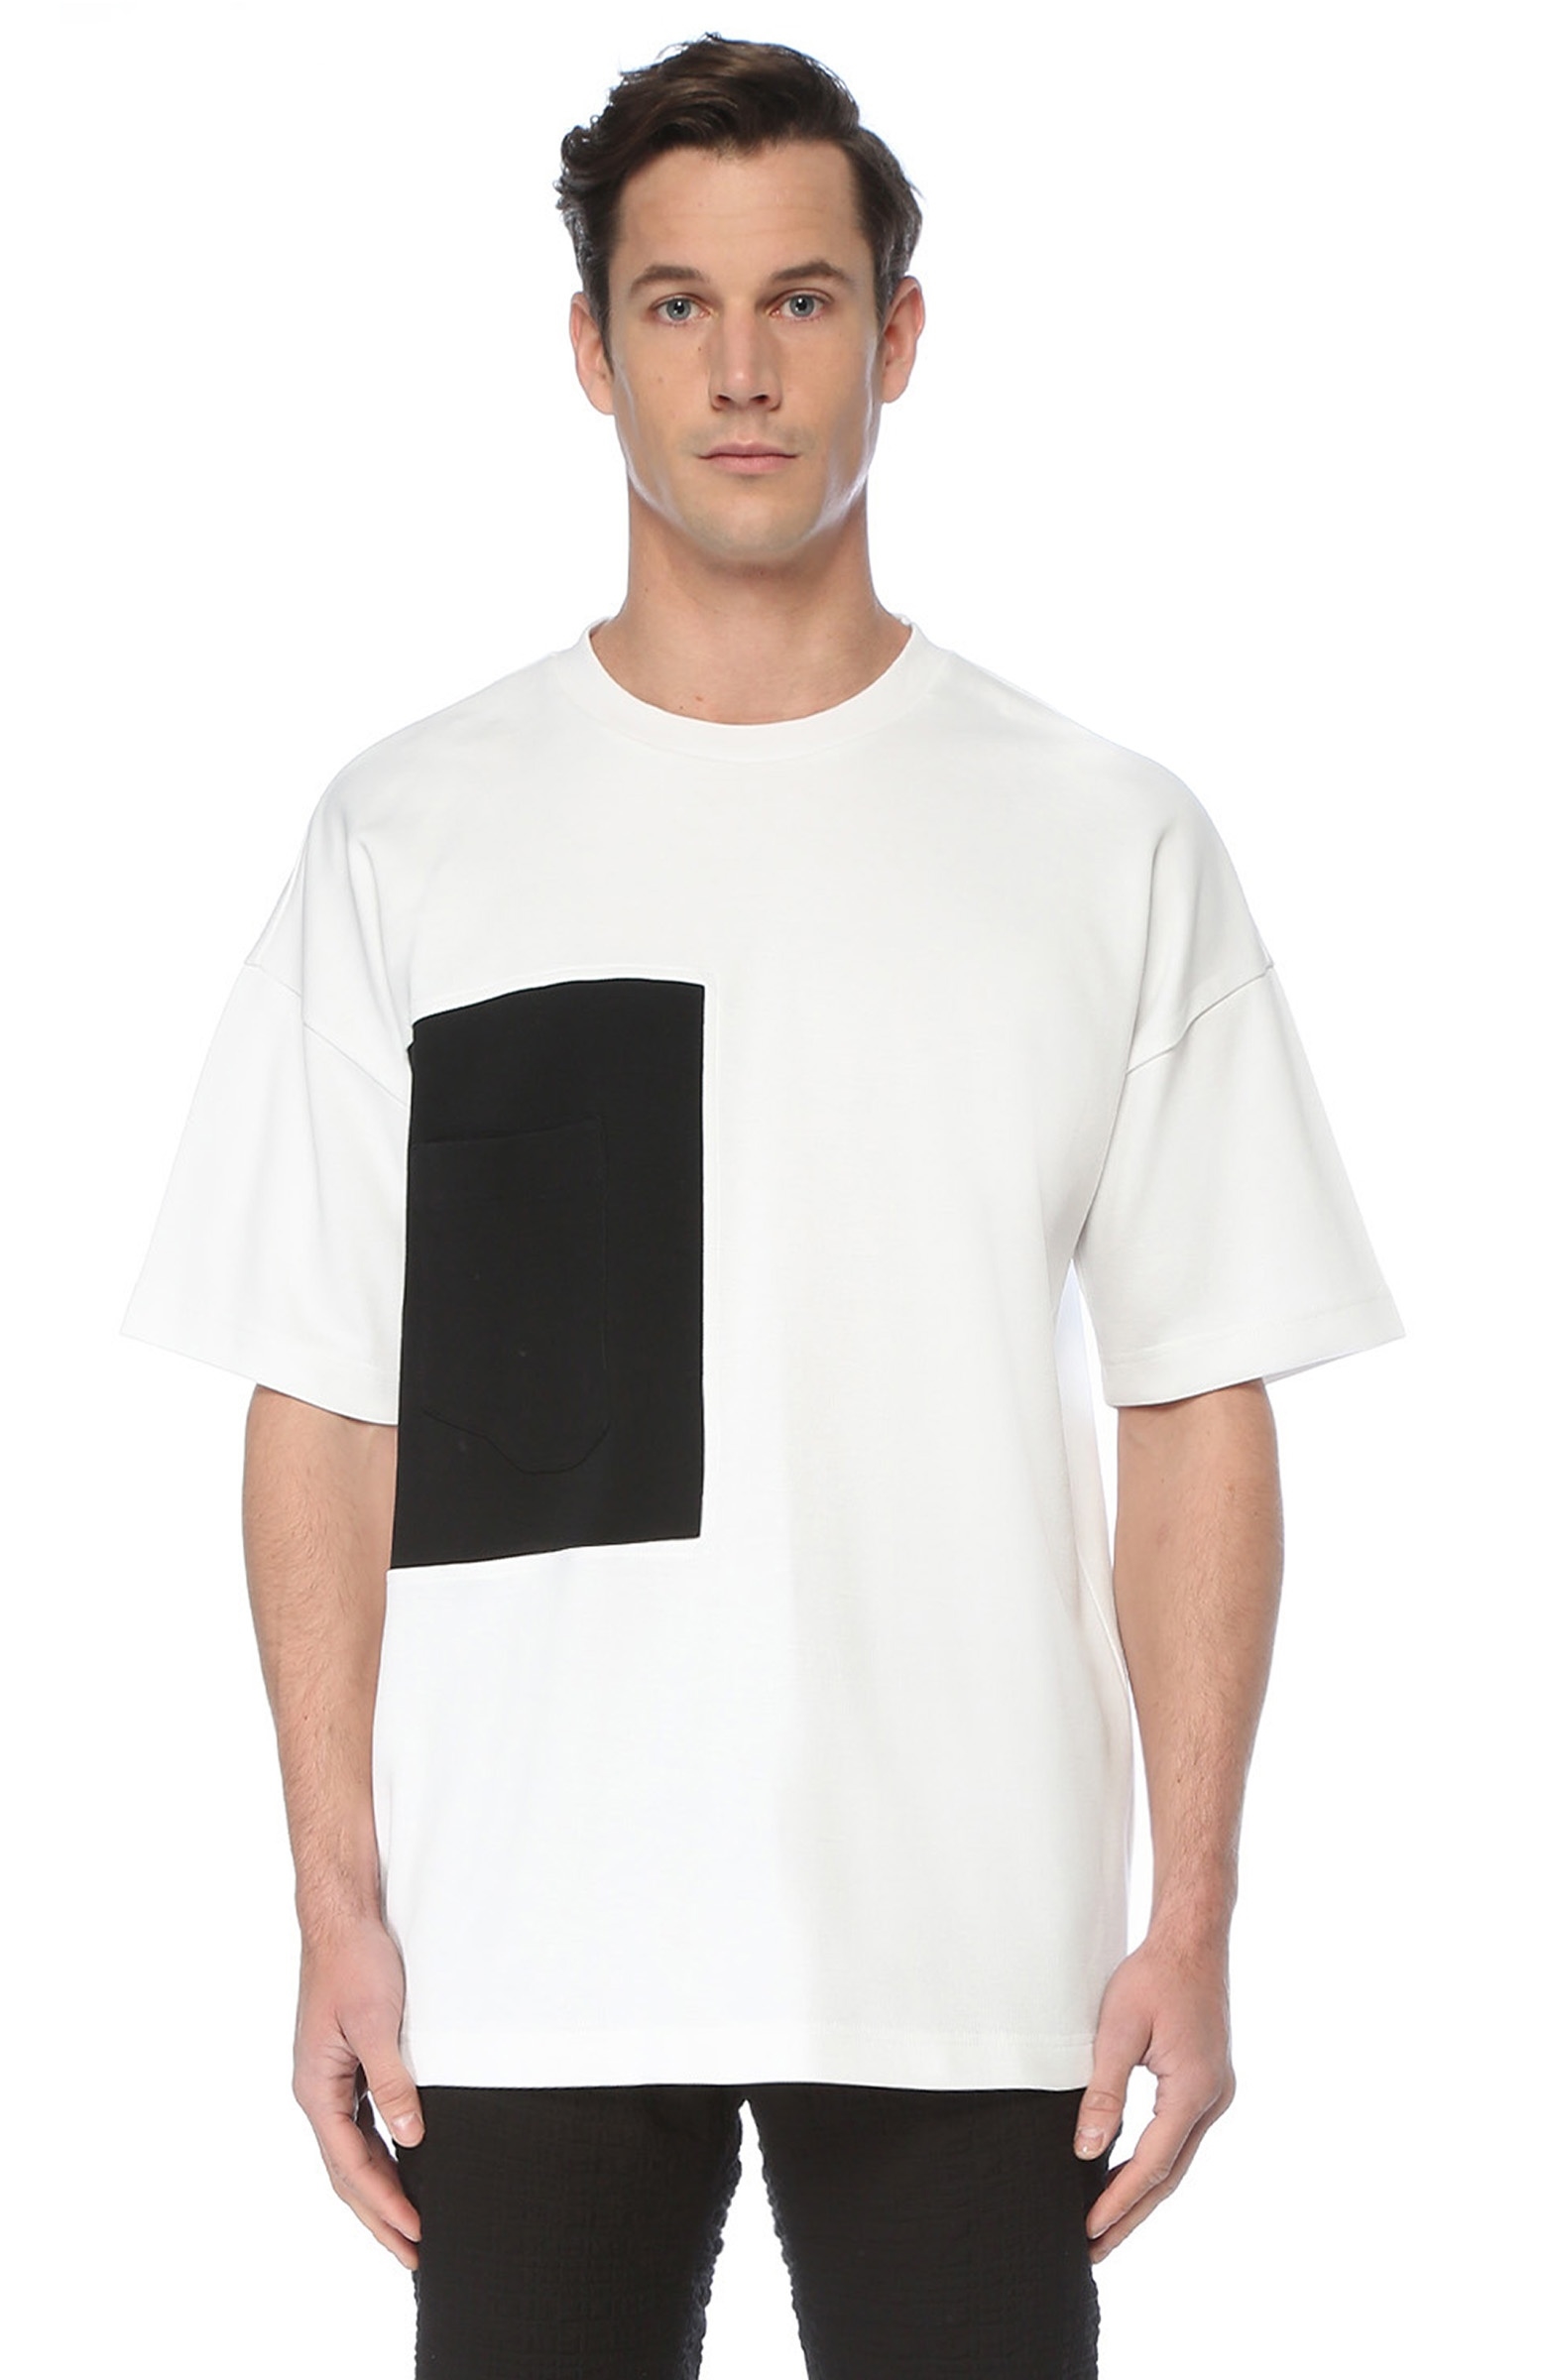 BJK x NetWork Beyaz Kontrast Cepli T-shirt